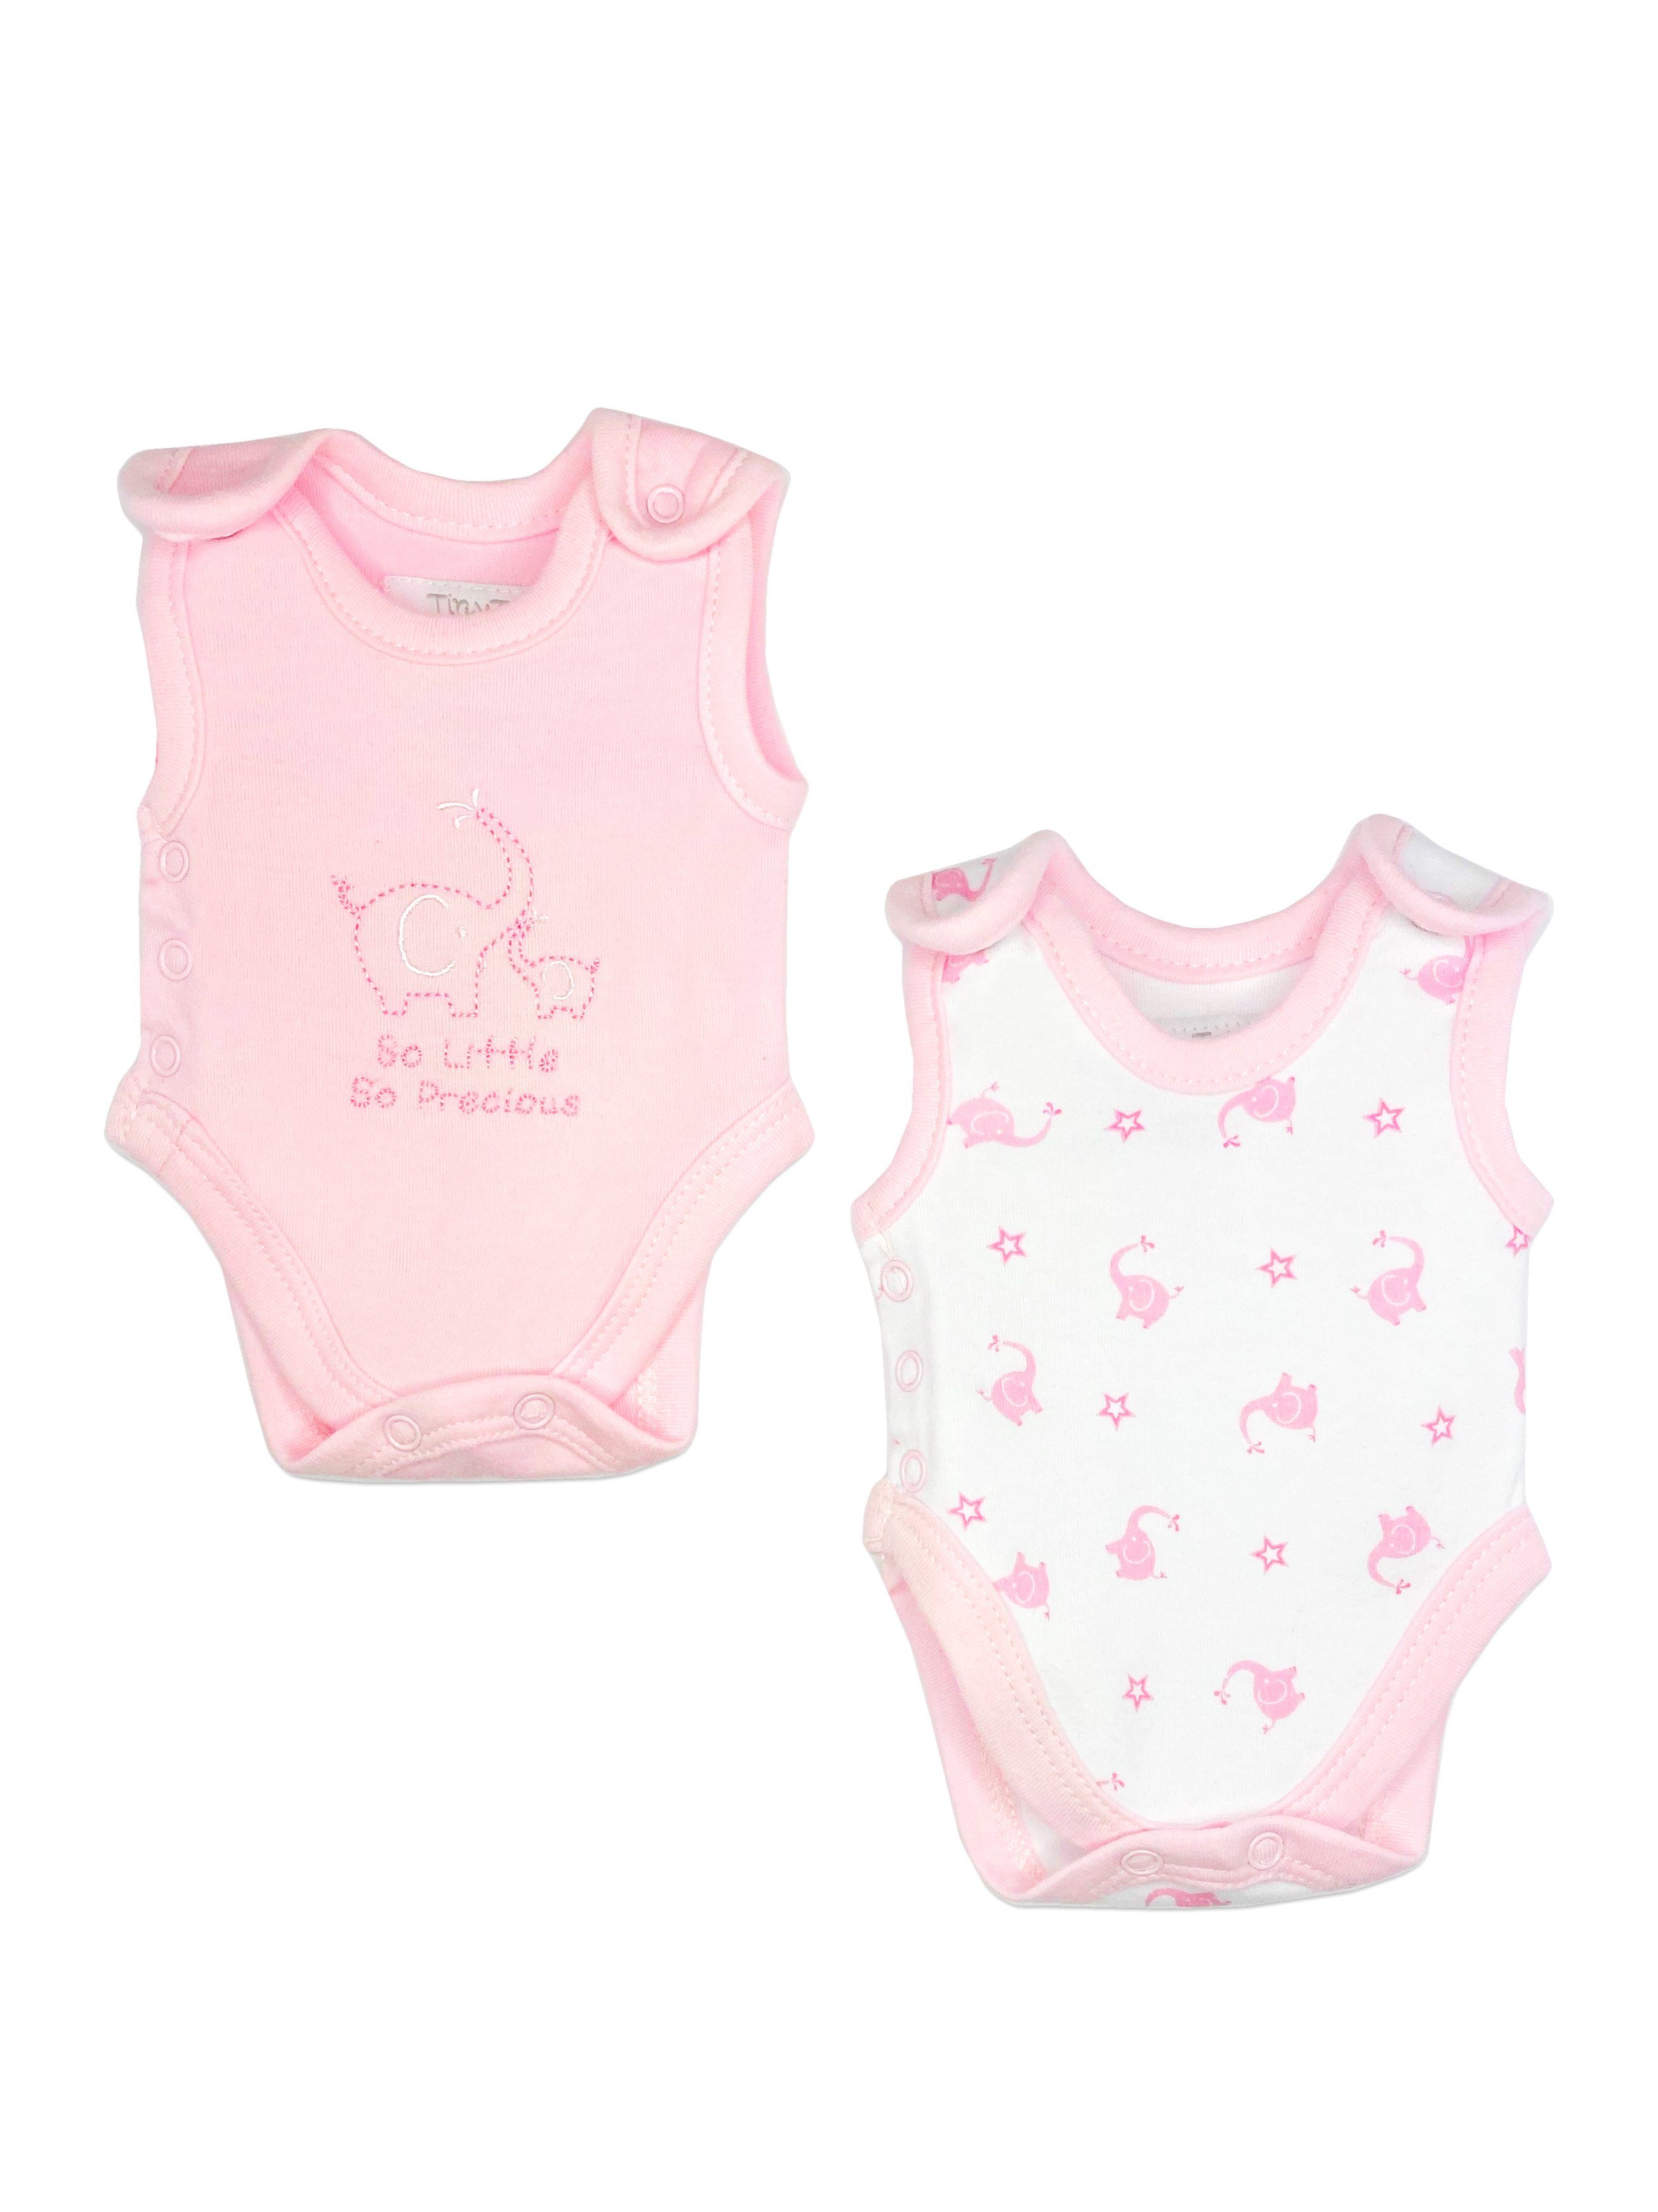 2 Pack Incubator Vests - Pink Elephant & Star - Incubator Vest - Tiny Chick